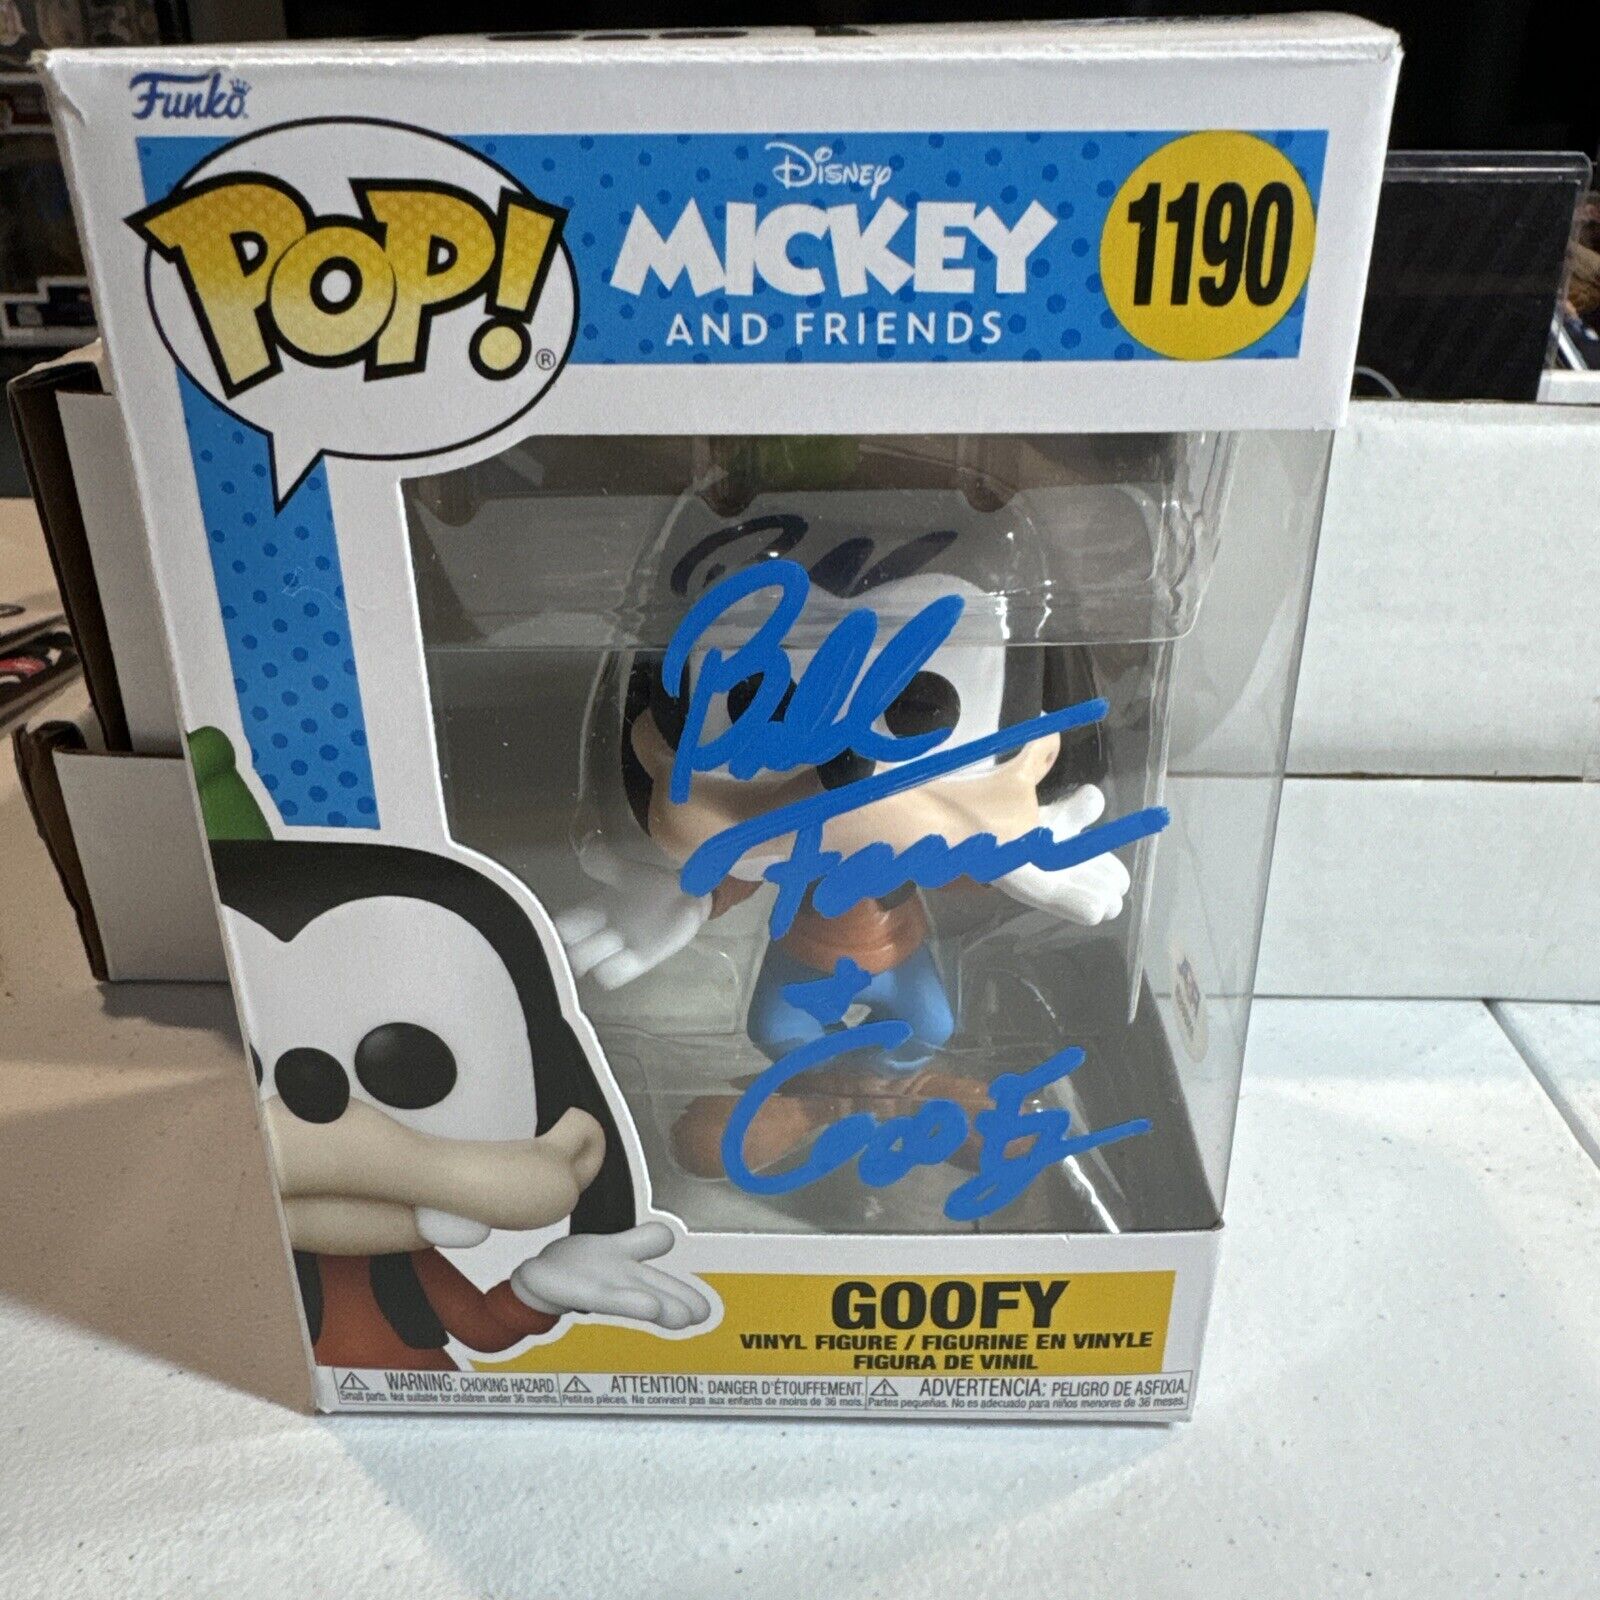 Funko Pop Disney Goofy signed by Bill Farmer 1190 PSA DNA AUTOGRAPH